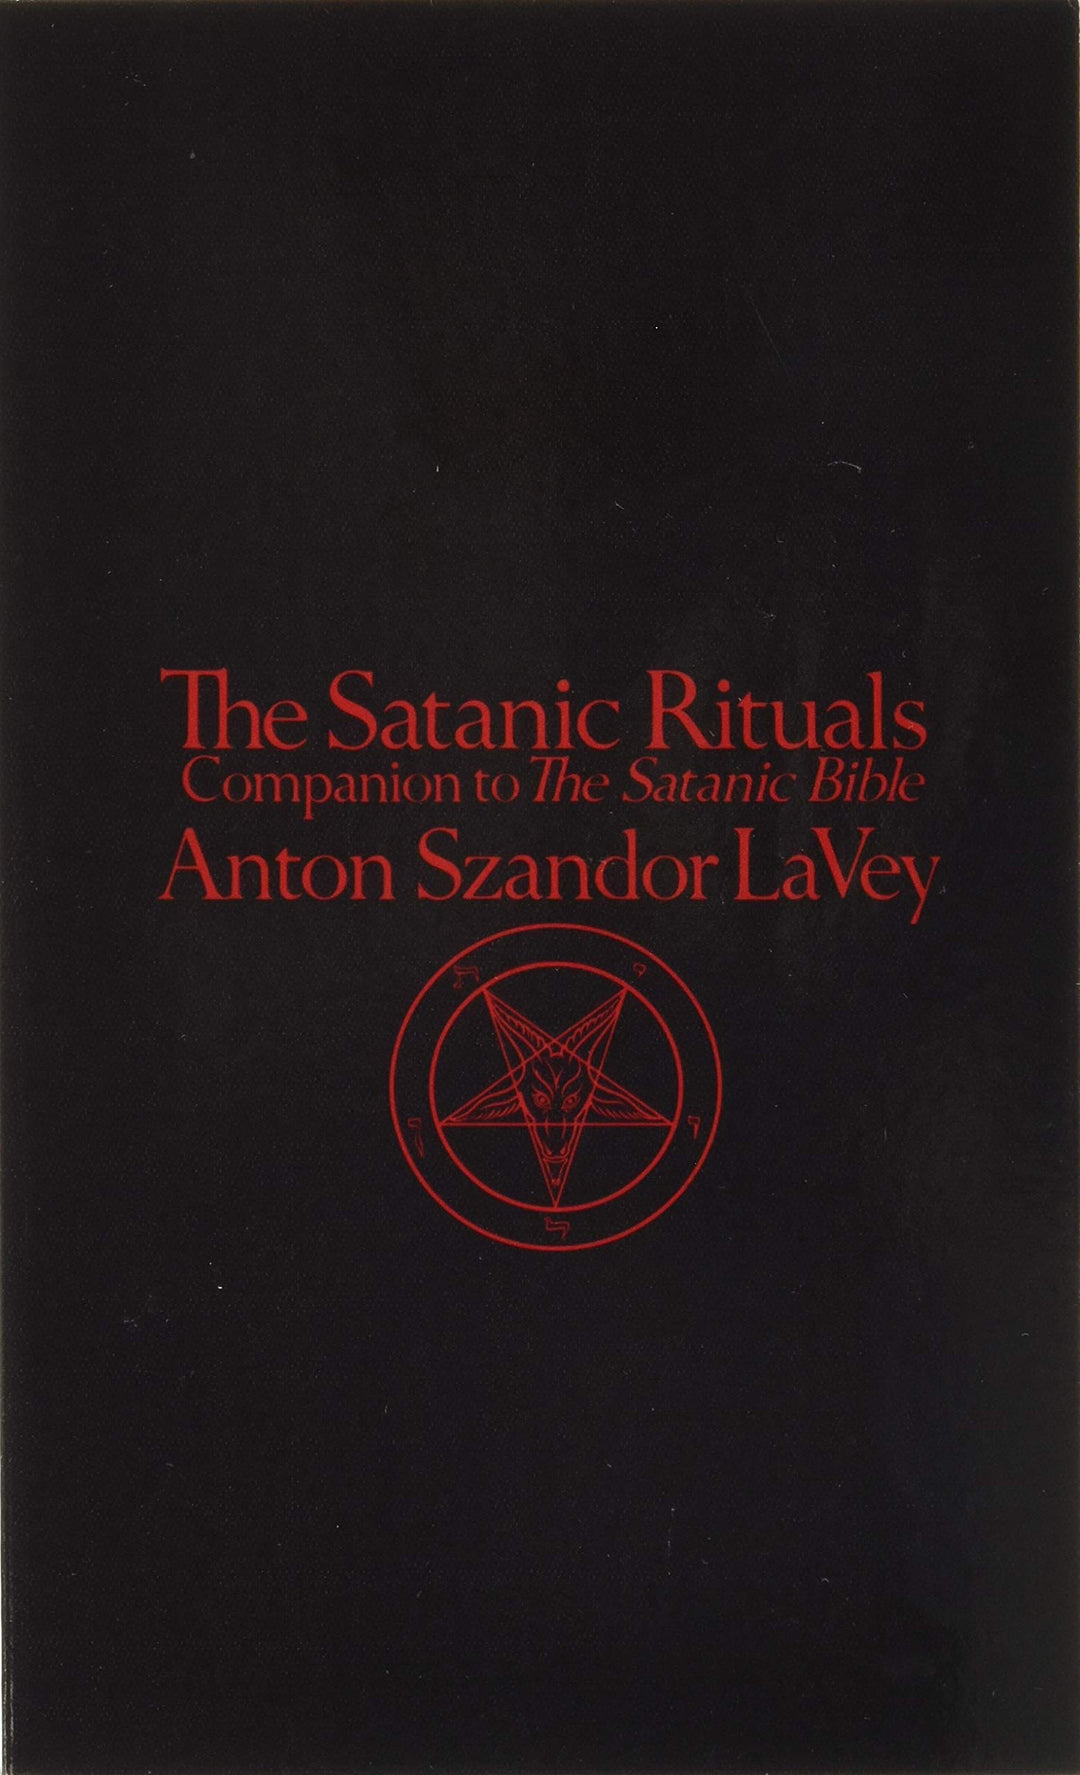 The Satanic Rituals: Companion to The Satanic Bible by Anton Szandor Lavey